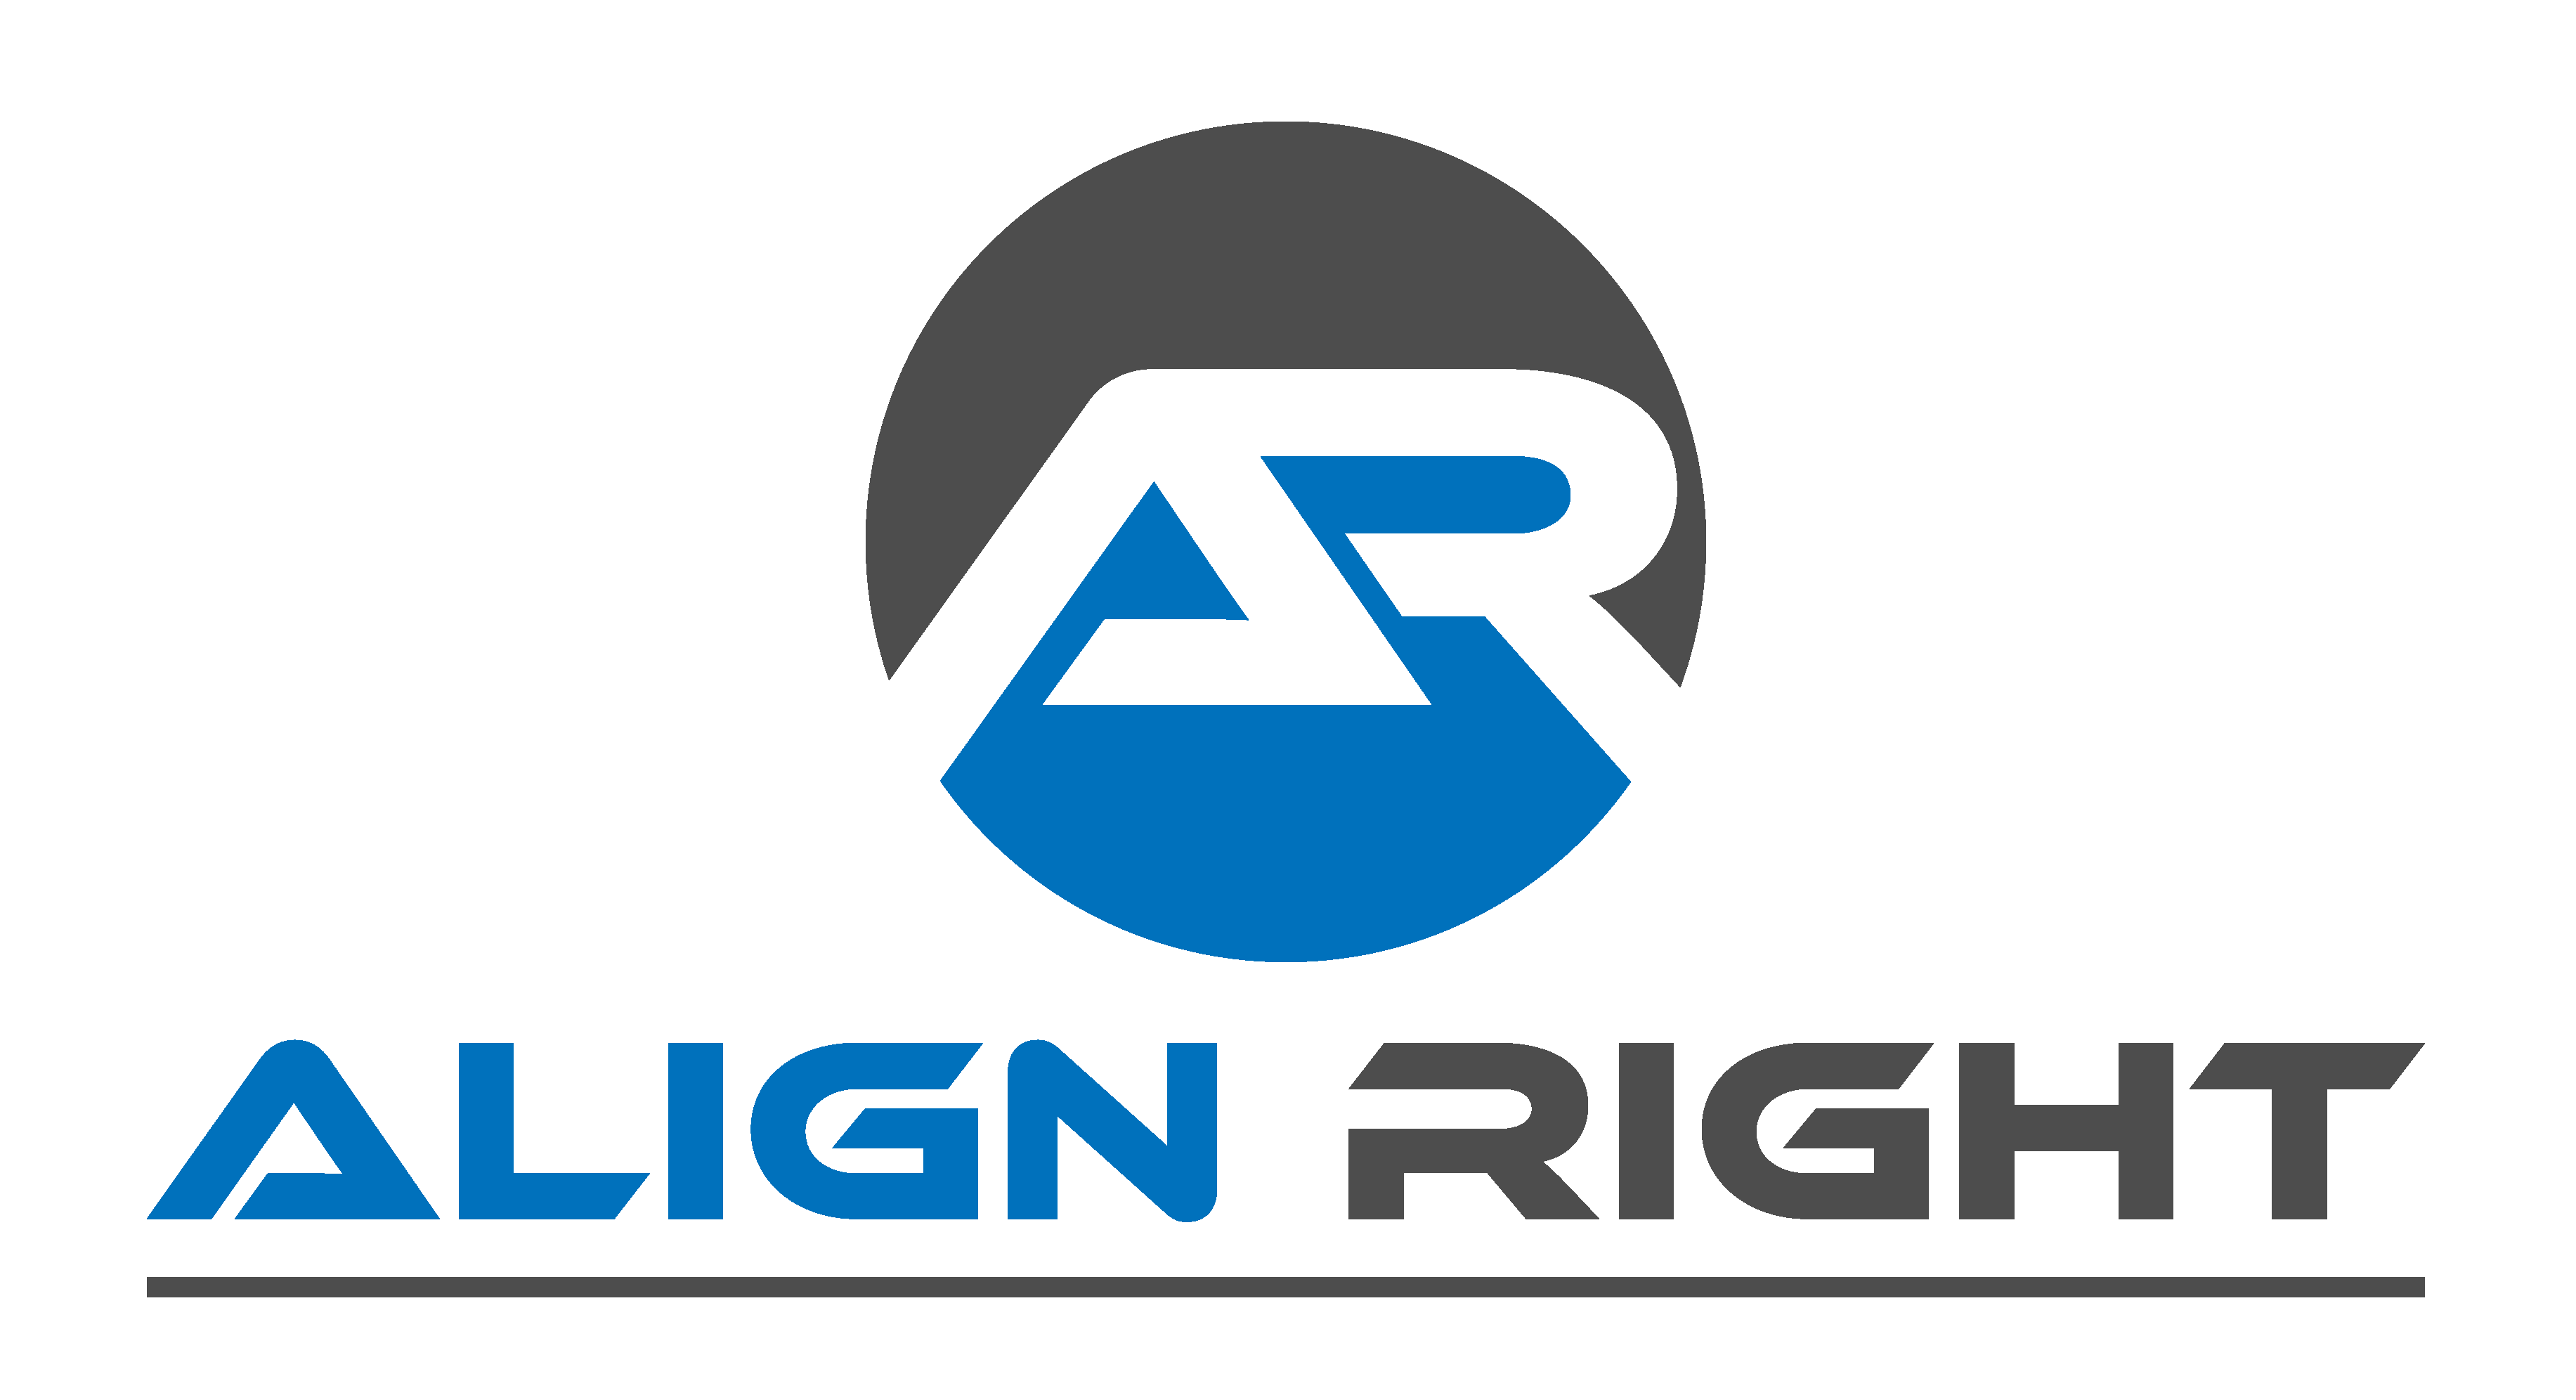 Align Right